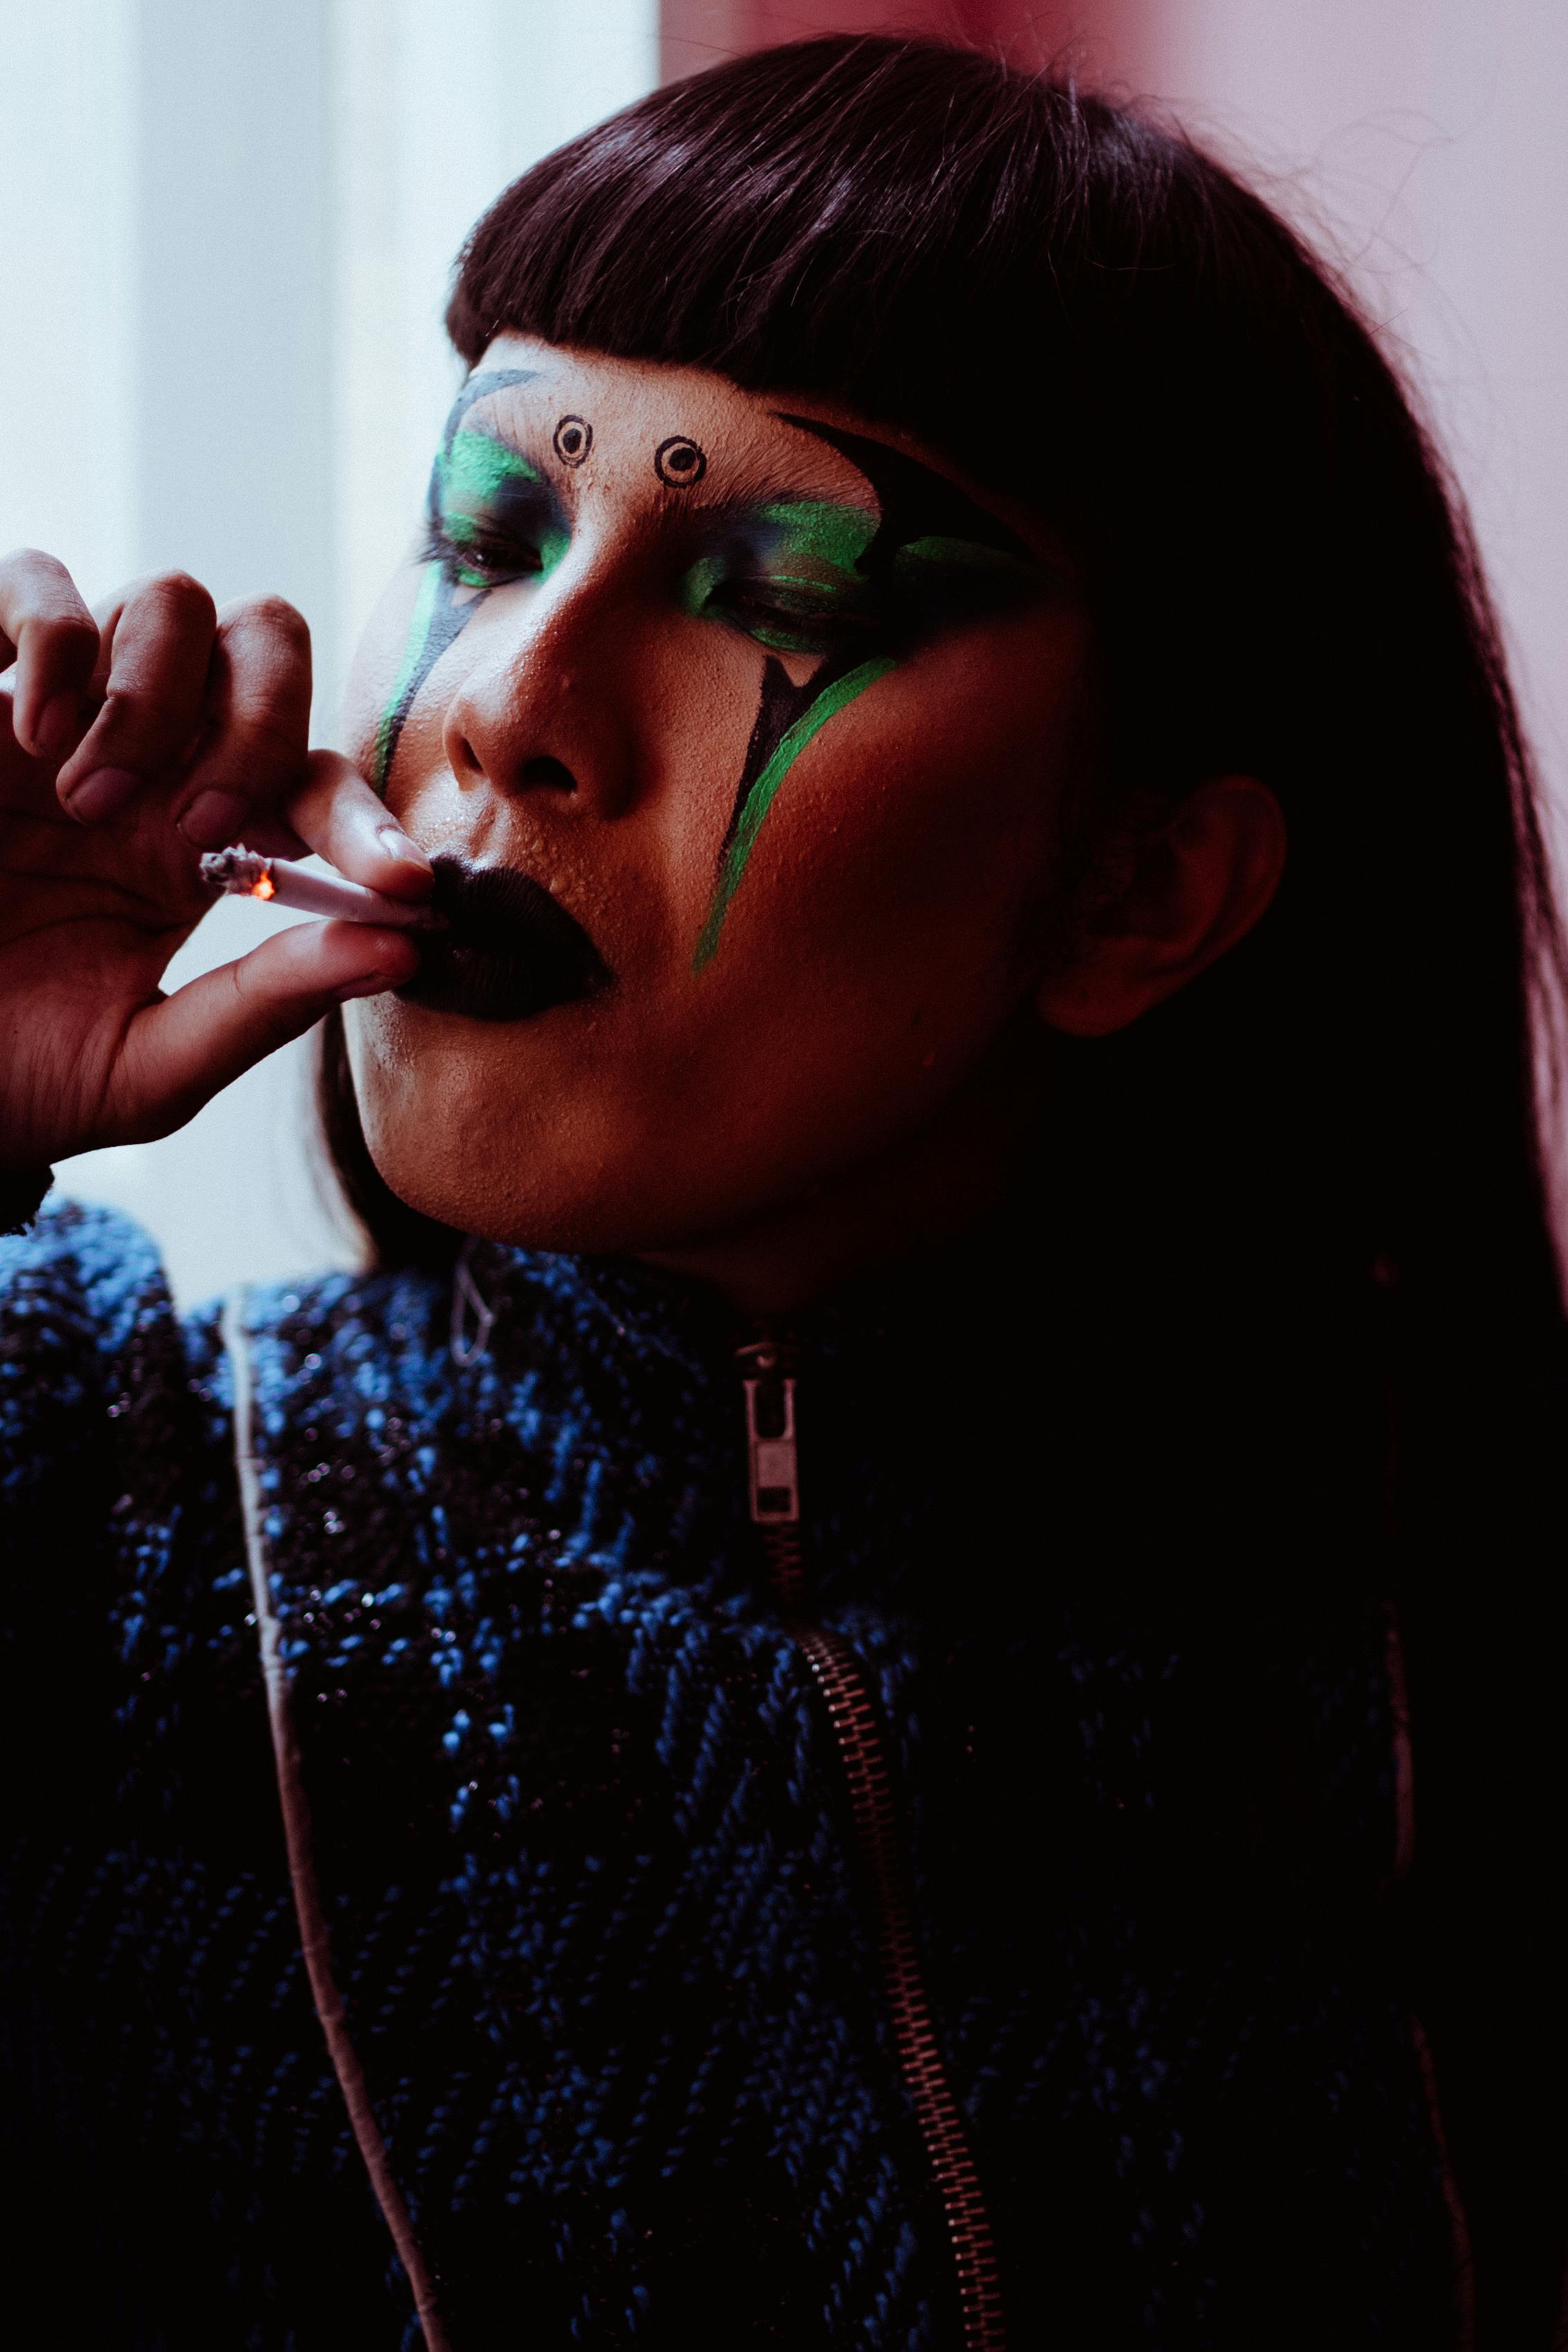 asian woman with makeup smoking cigarette